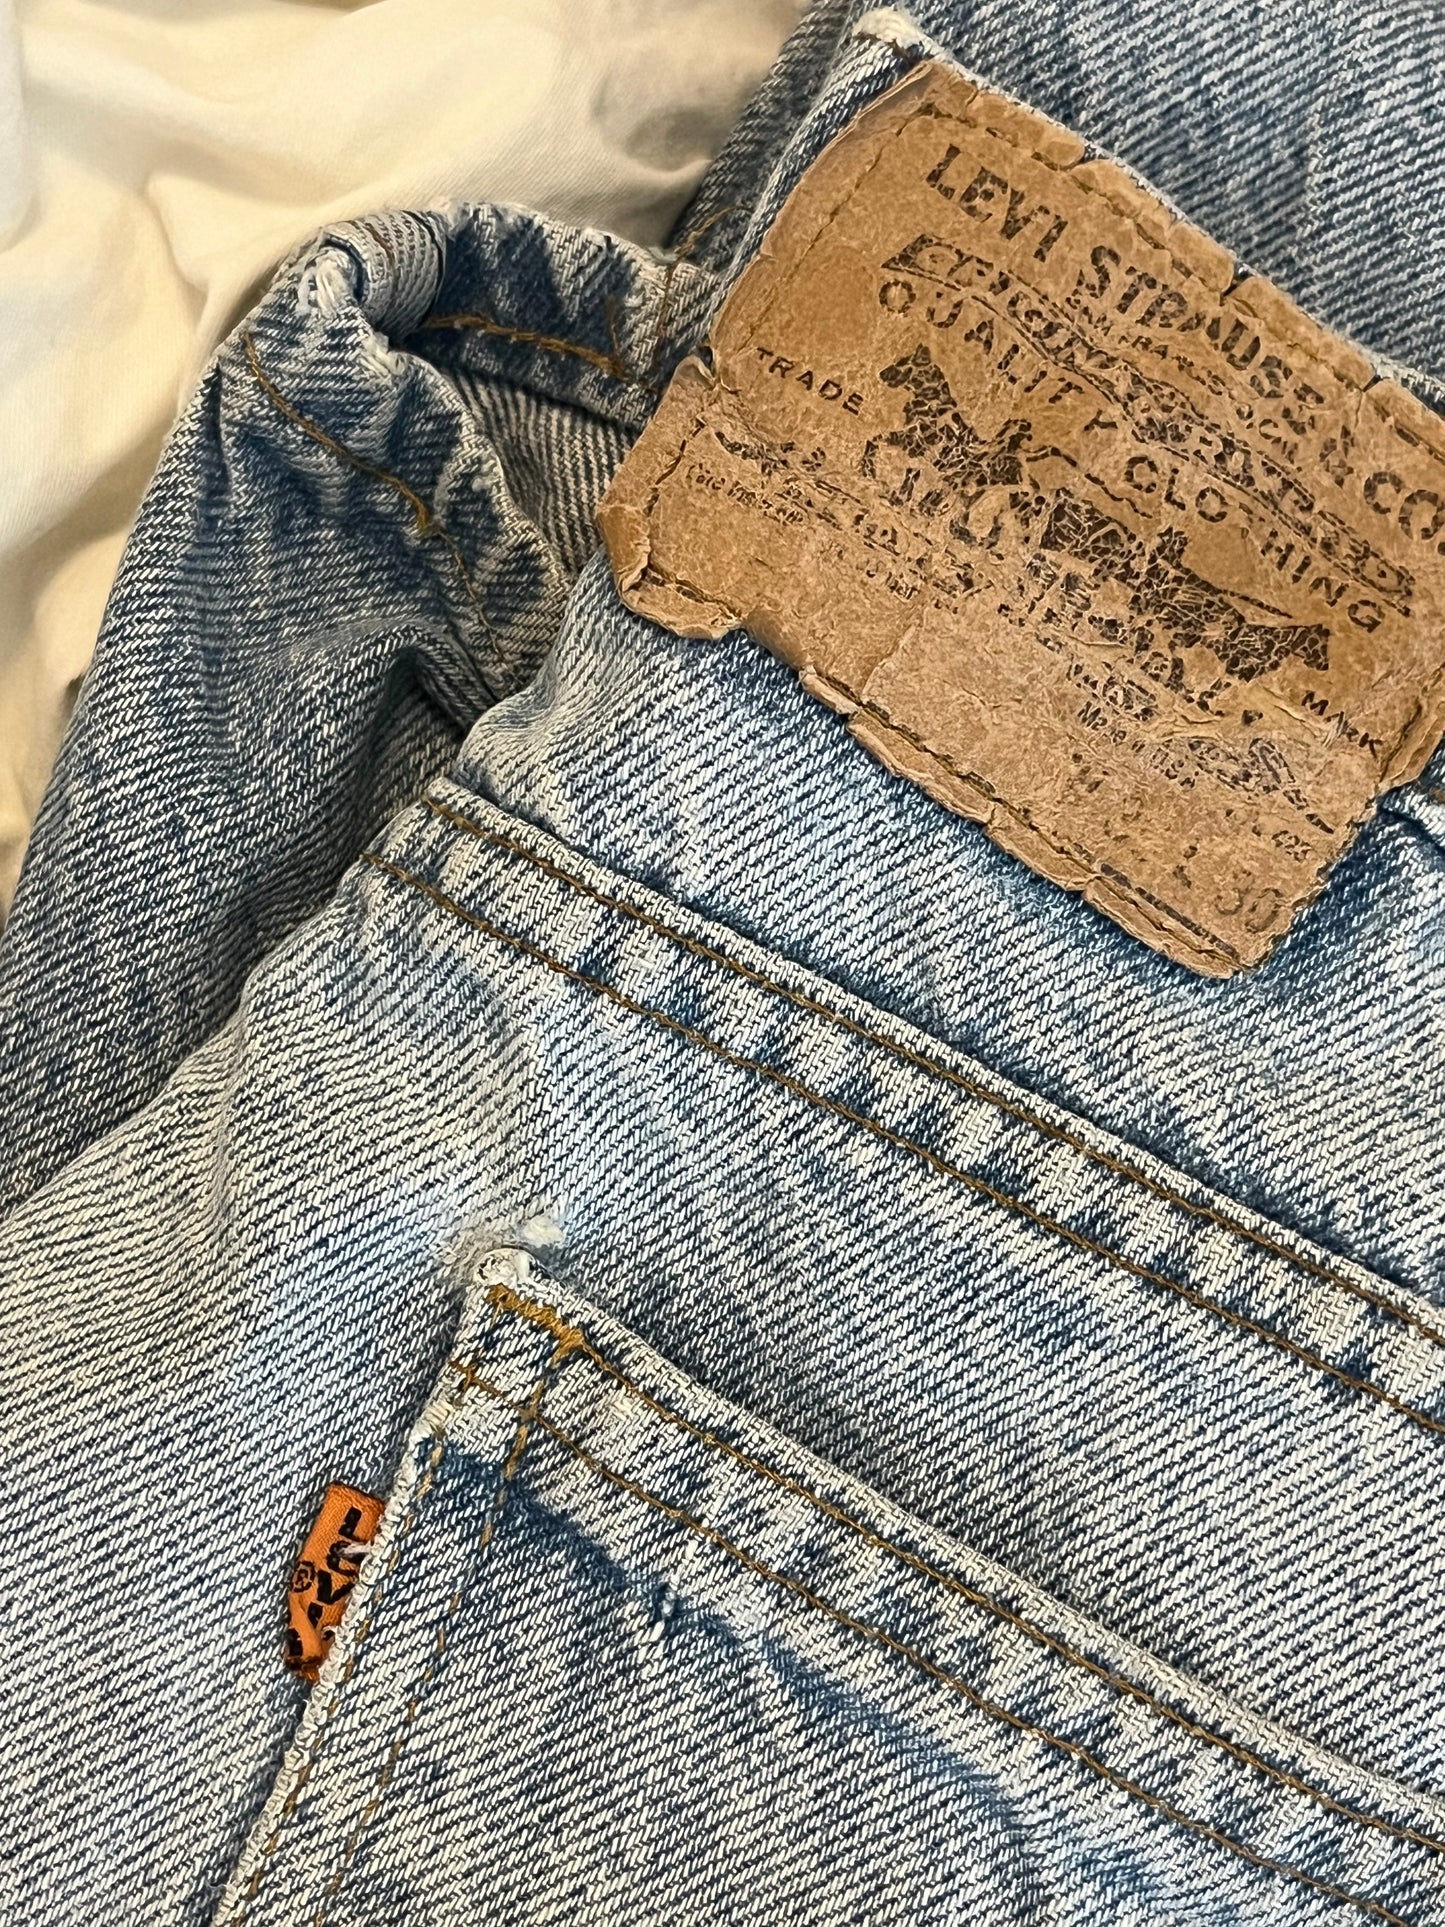 Vintage Levi Denim Blue Jeans- Orange Tab